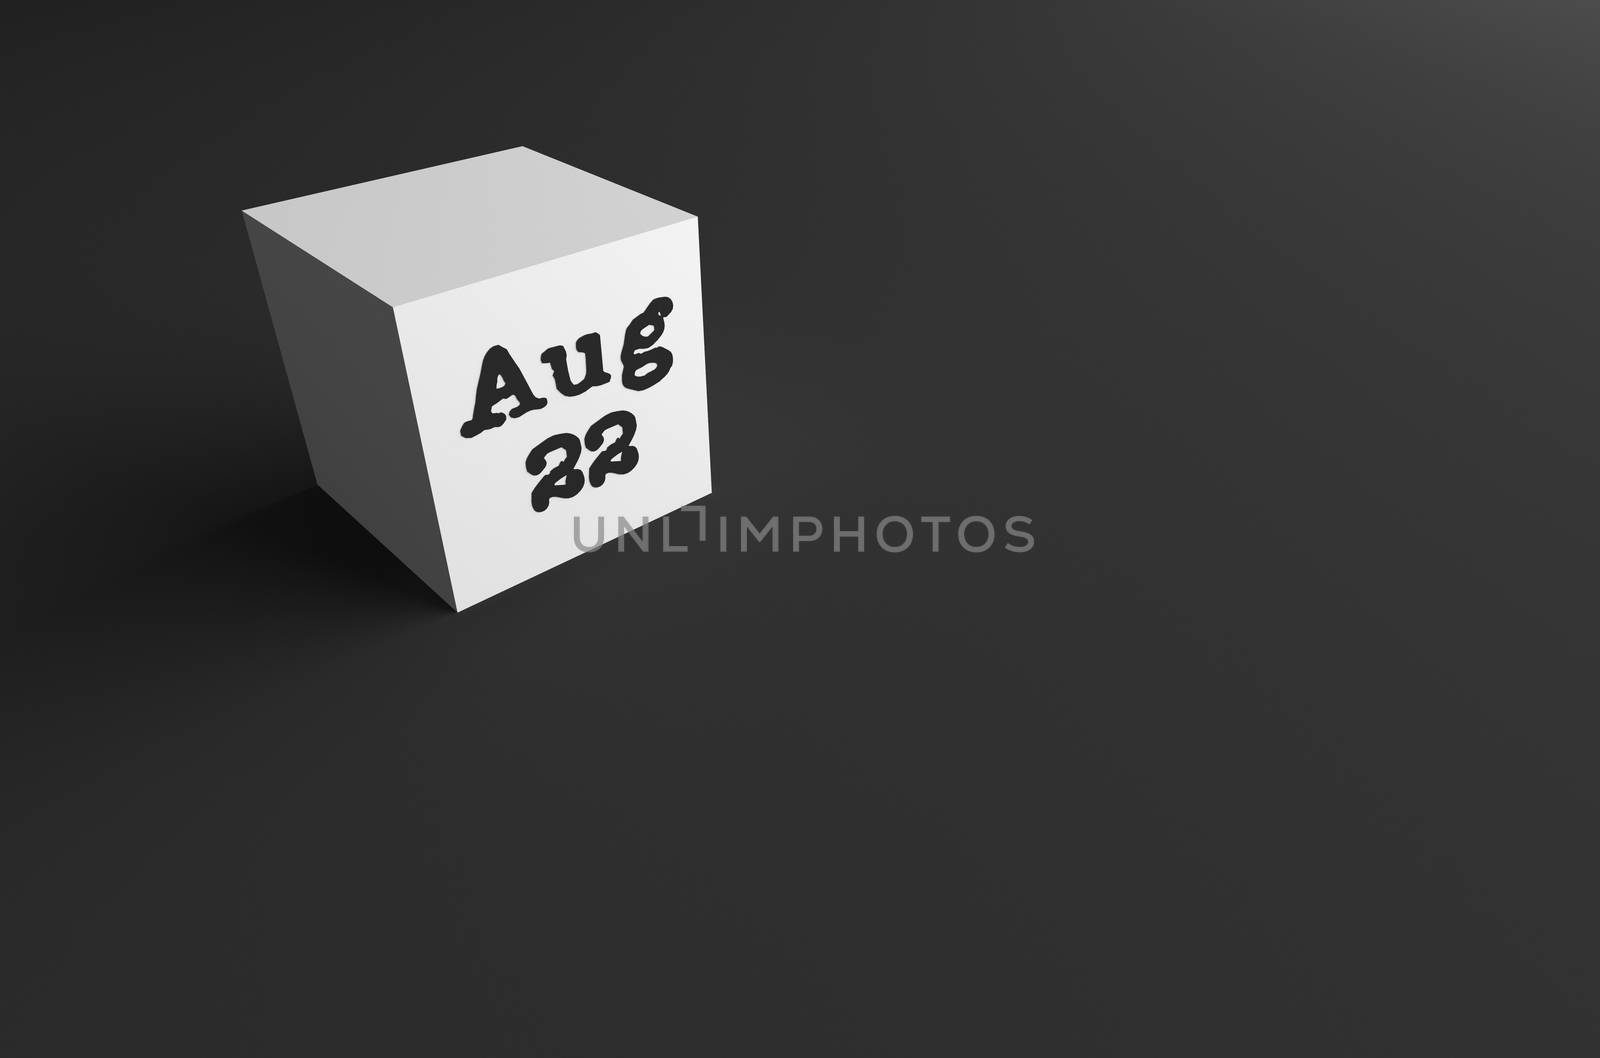 3D RENDERING OF Aug 22 by PrettyTG